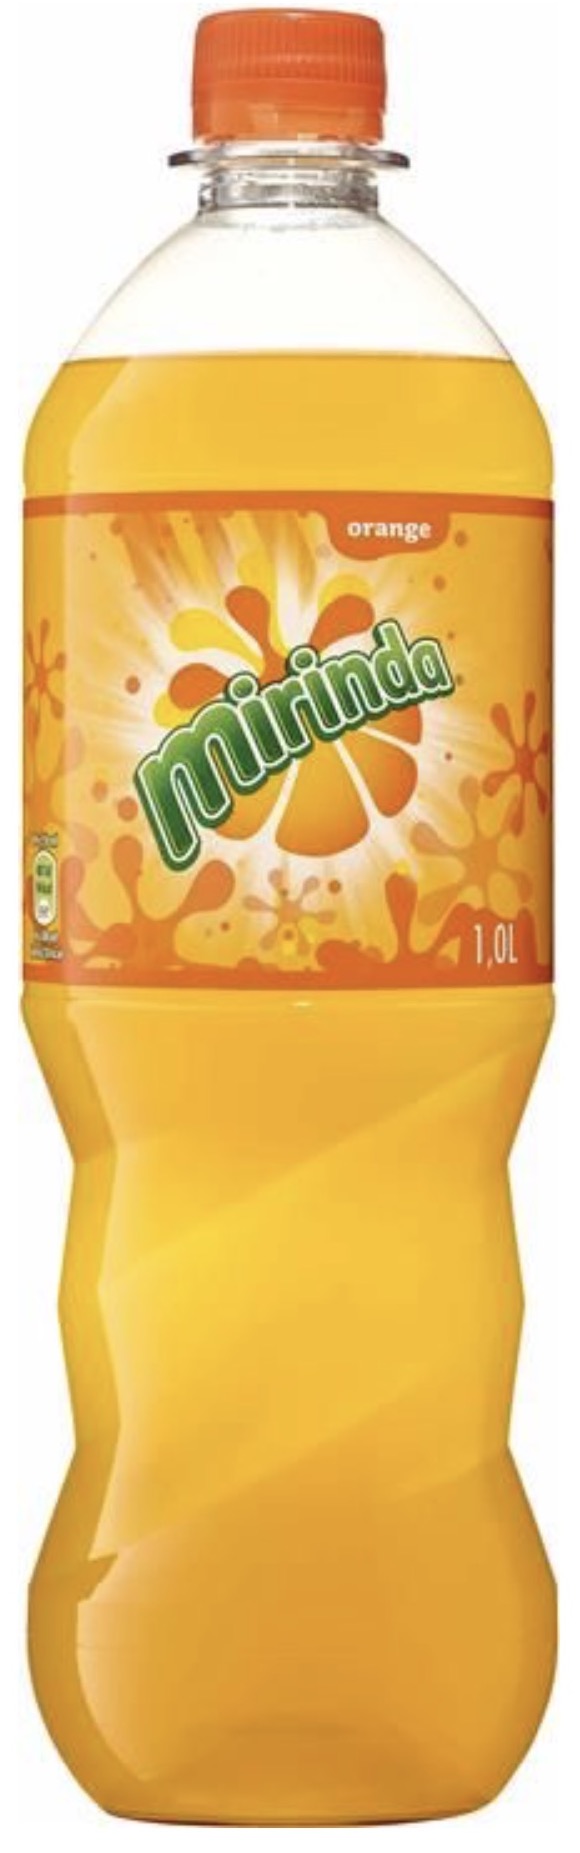 Mirinda Orange 1,0l MEHRWEG